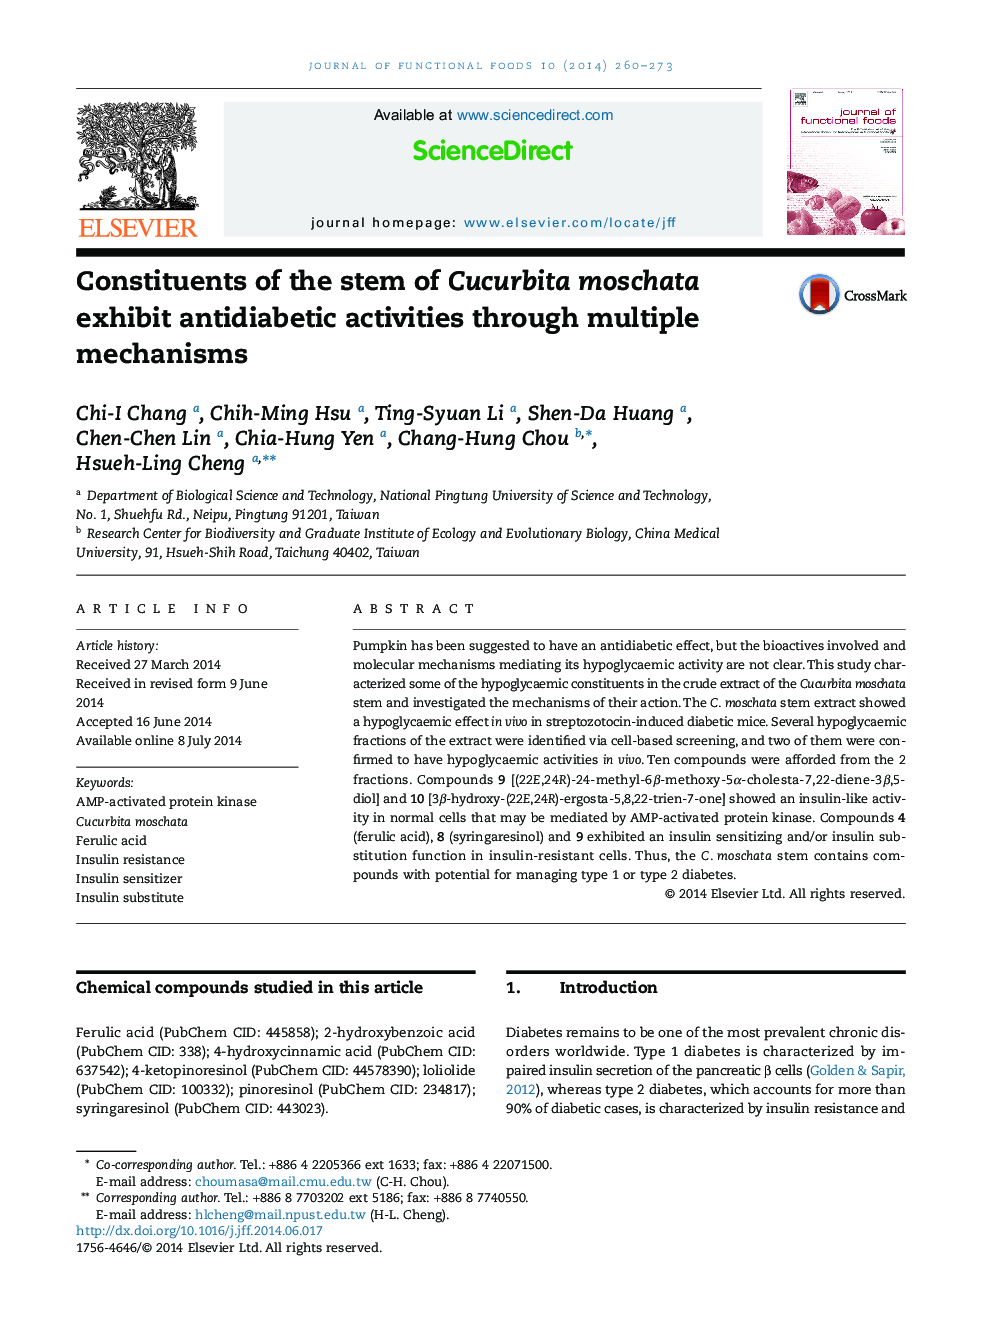 Constituents of the stem of Cucurbita moschata exhibit antidiabetic activities through multiple mechanisms